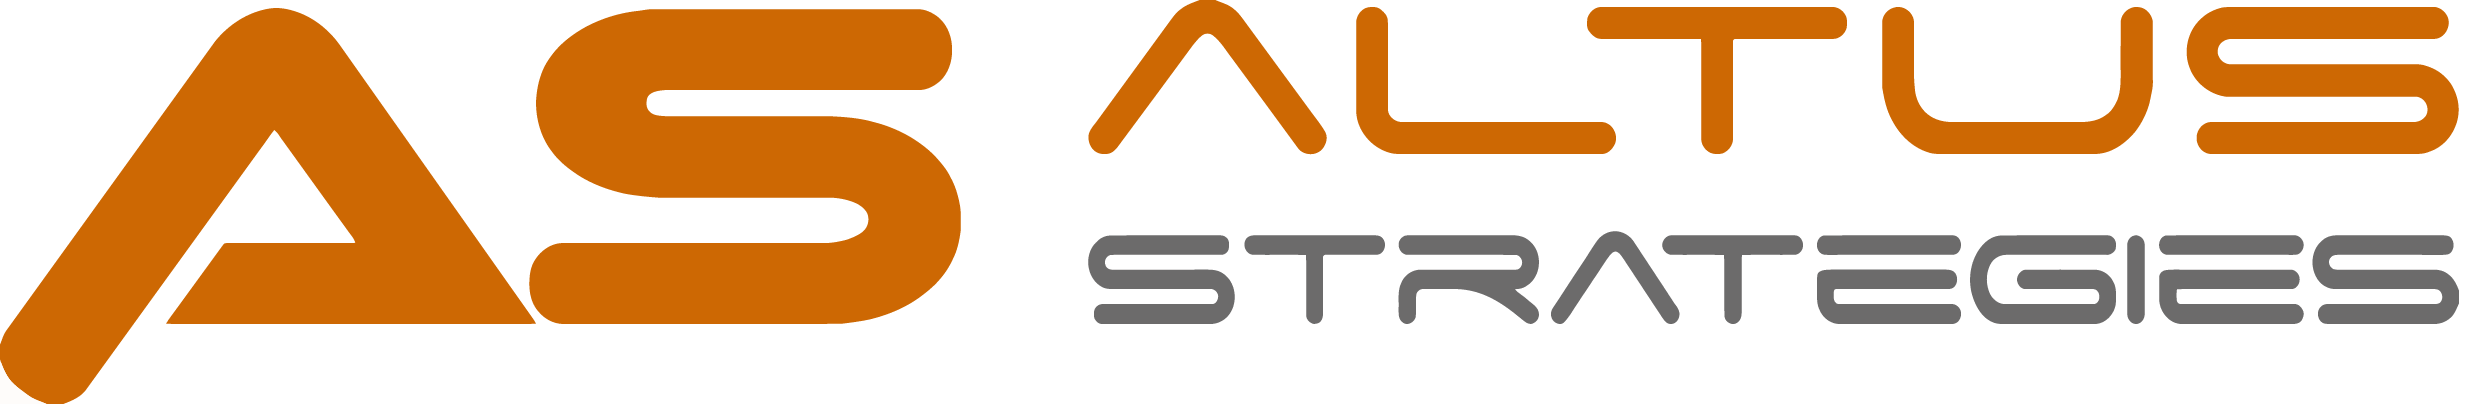 Altus Strategies Plc, Monday, March 15, 2021, Press release picture